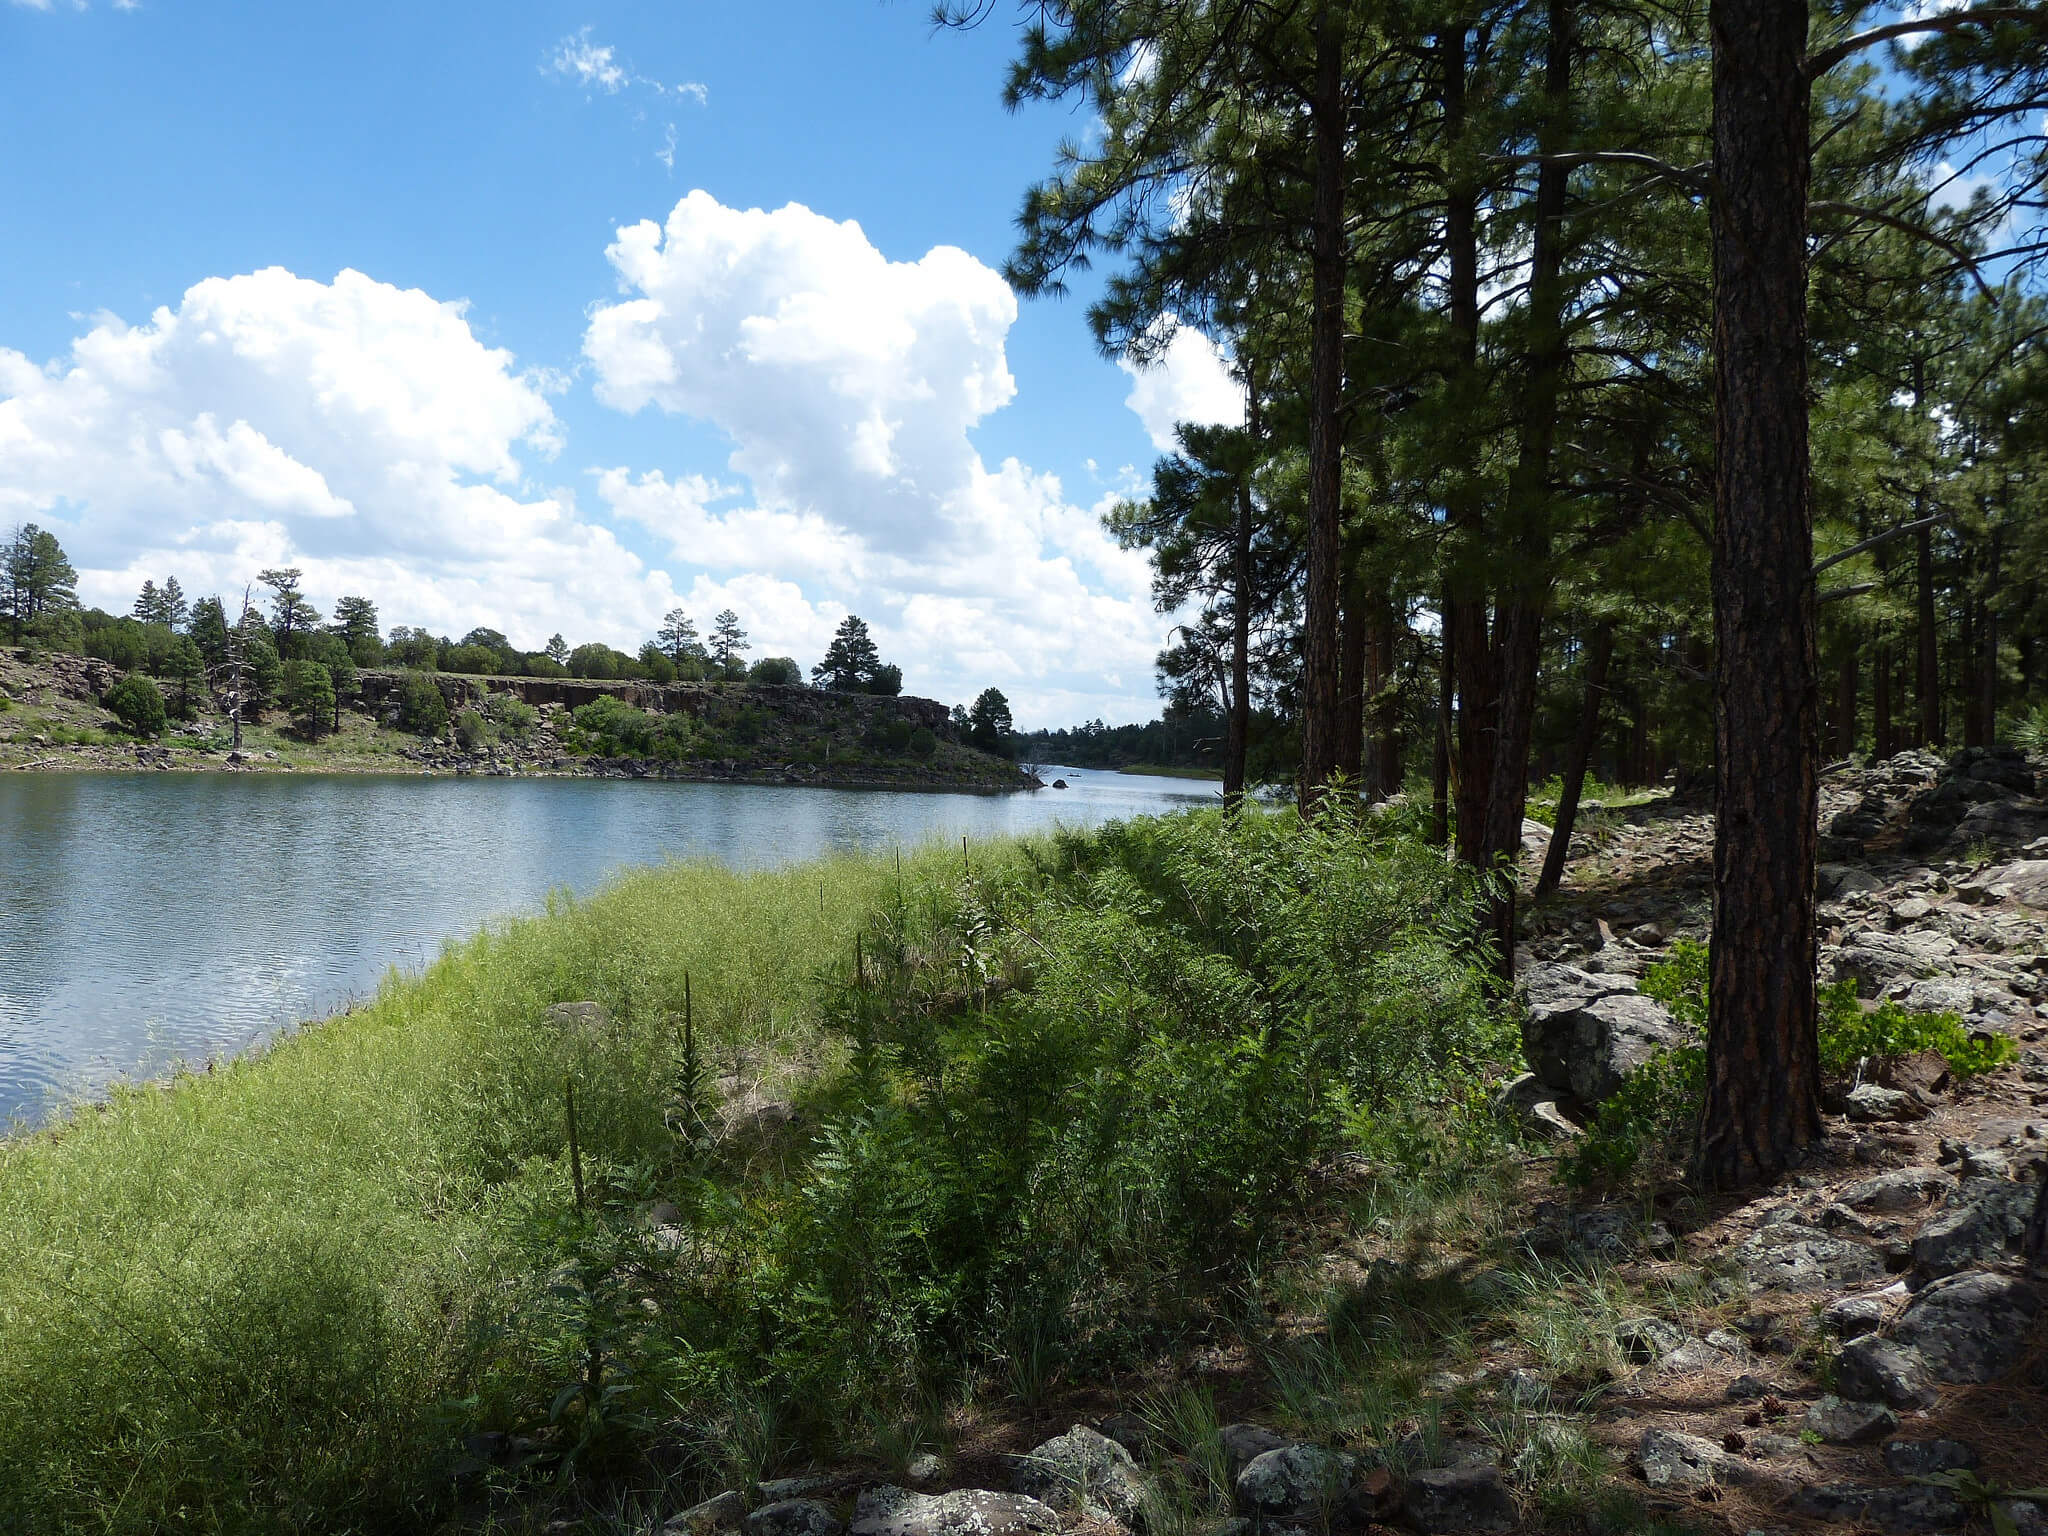 Ponderosa pine trees along Fool Hollow Lake.
Flickr User Keith Graves